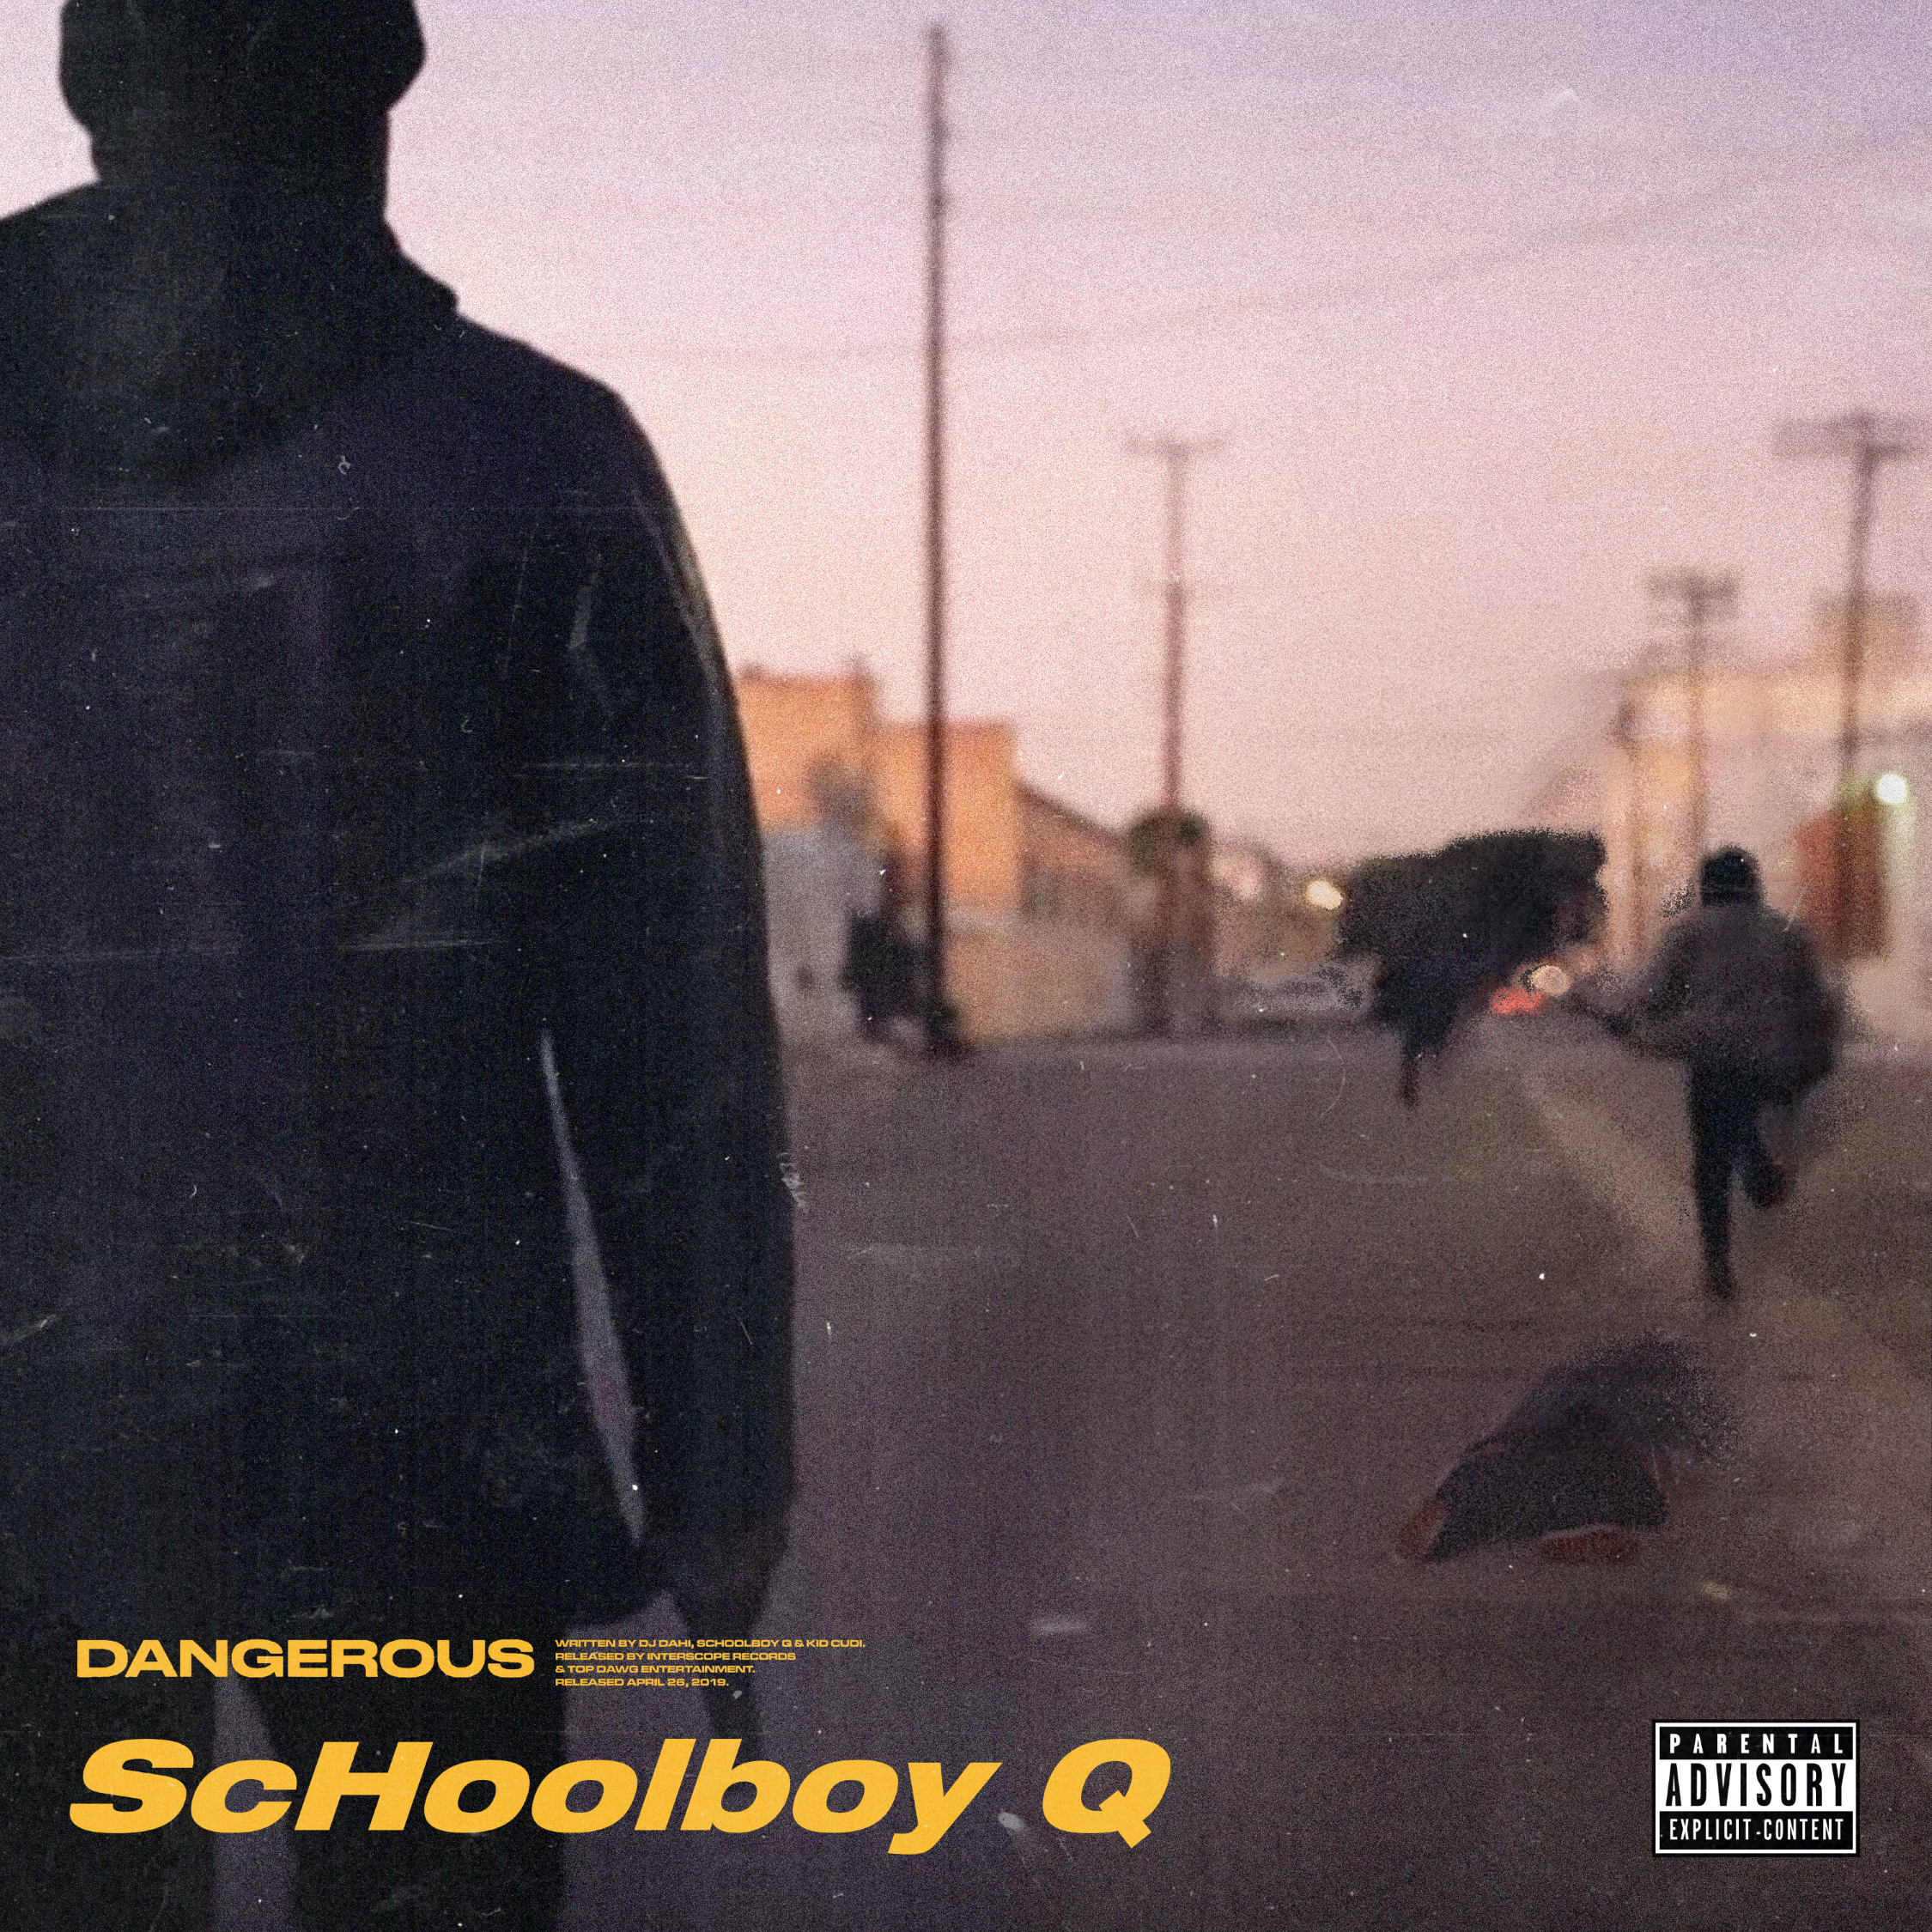 Dangerous Schoolboy Q Cover - HD Wallpaper 